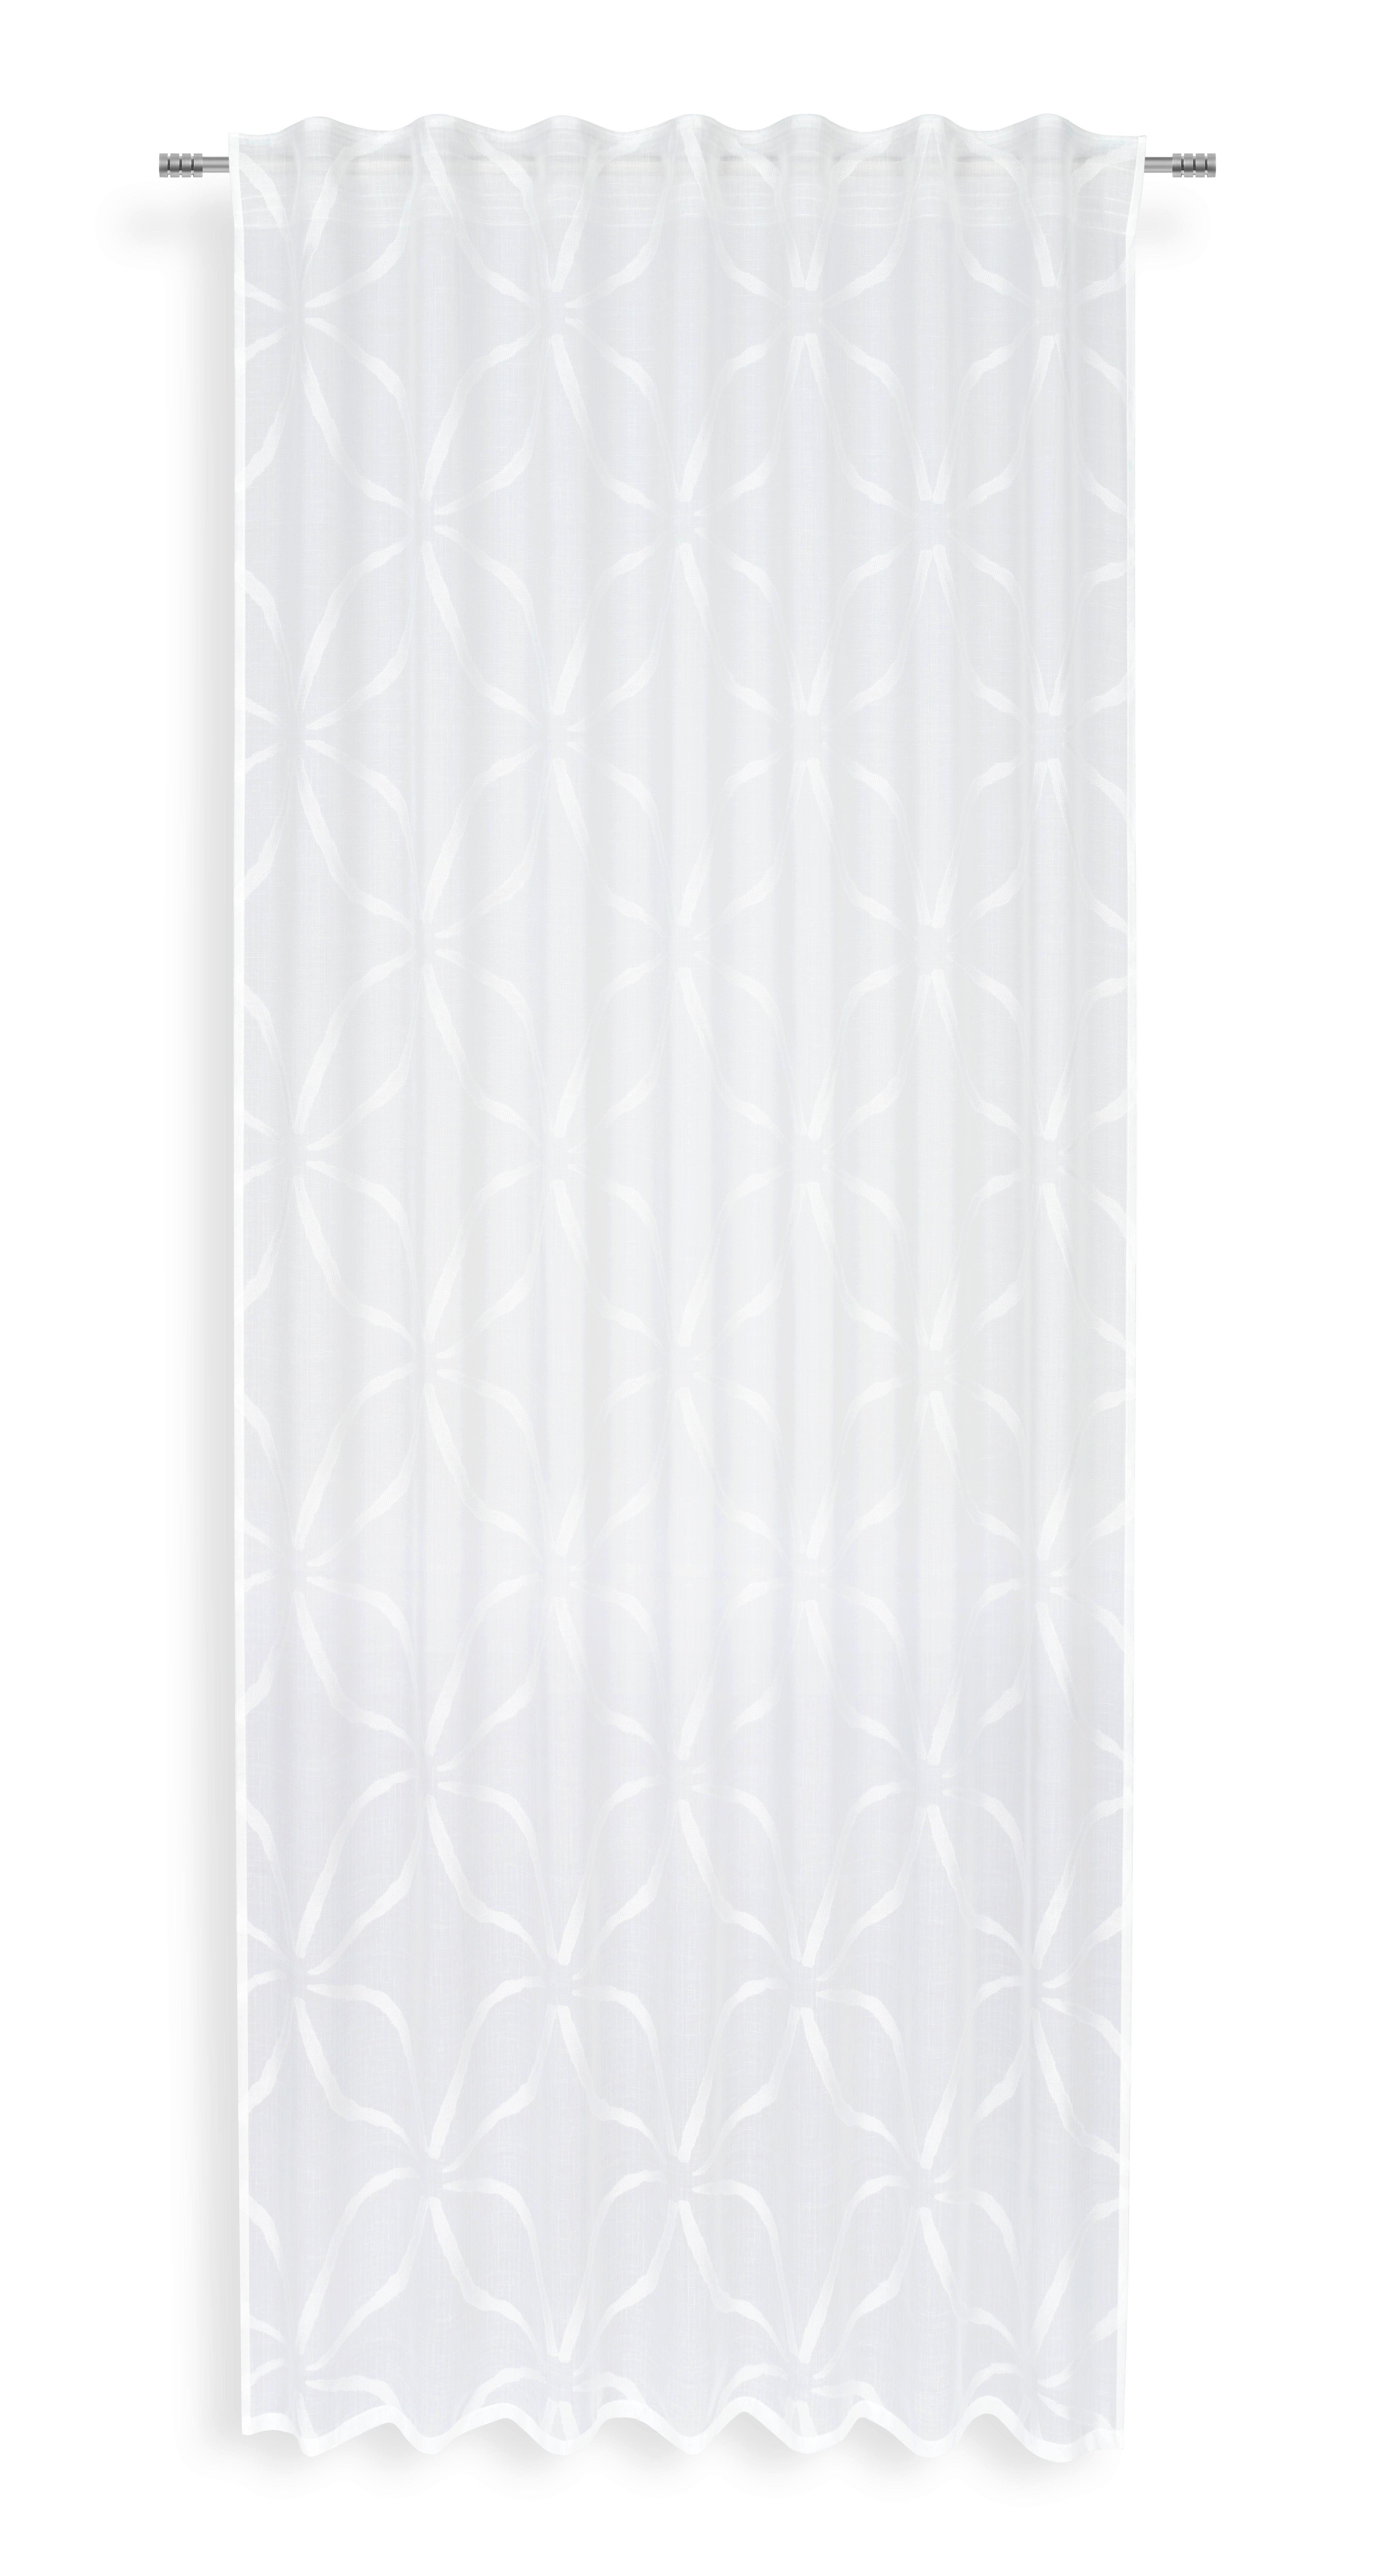 Készfüggöny Doris - Fehér, modern, Textil (140/245cm) - Luca Bessoni